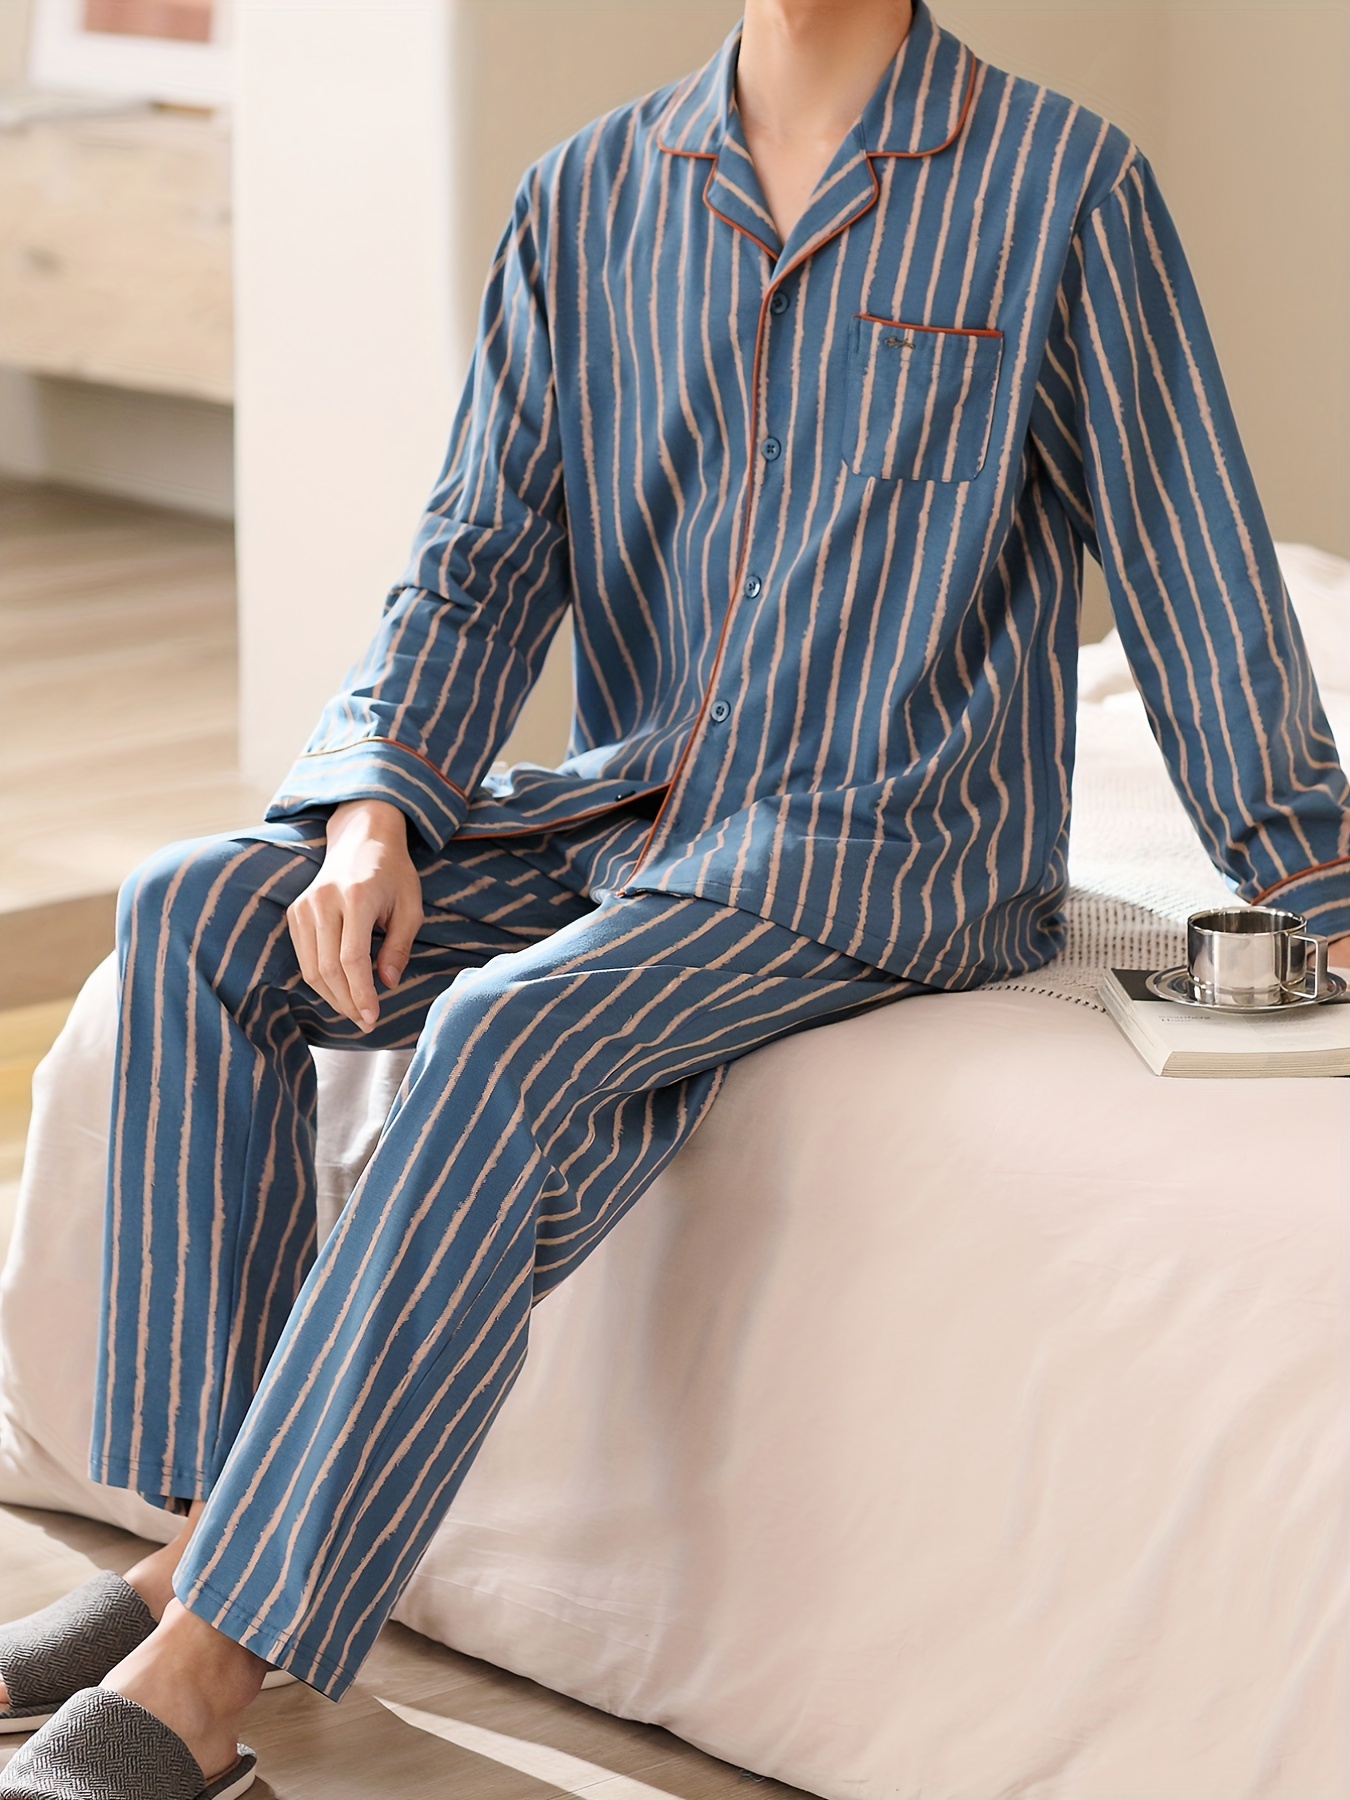 Pijamas de lino de algodón para hombre, pantalones de pijama a cuadros para  descansar, dormir, pantalones de pijama con bolsillos y cordón para dormir